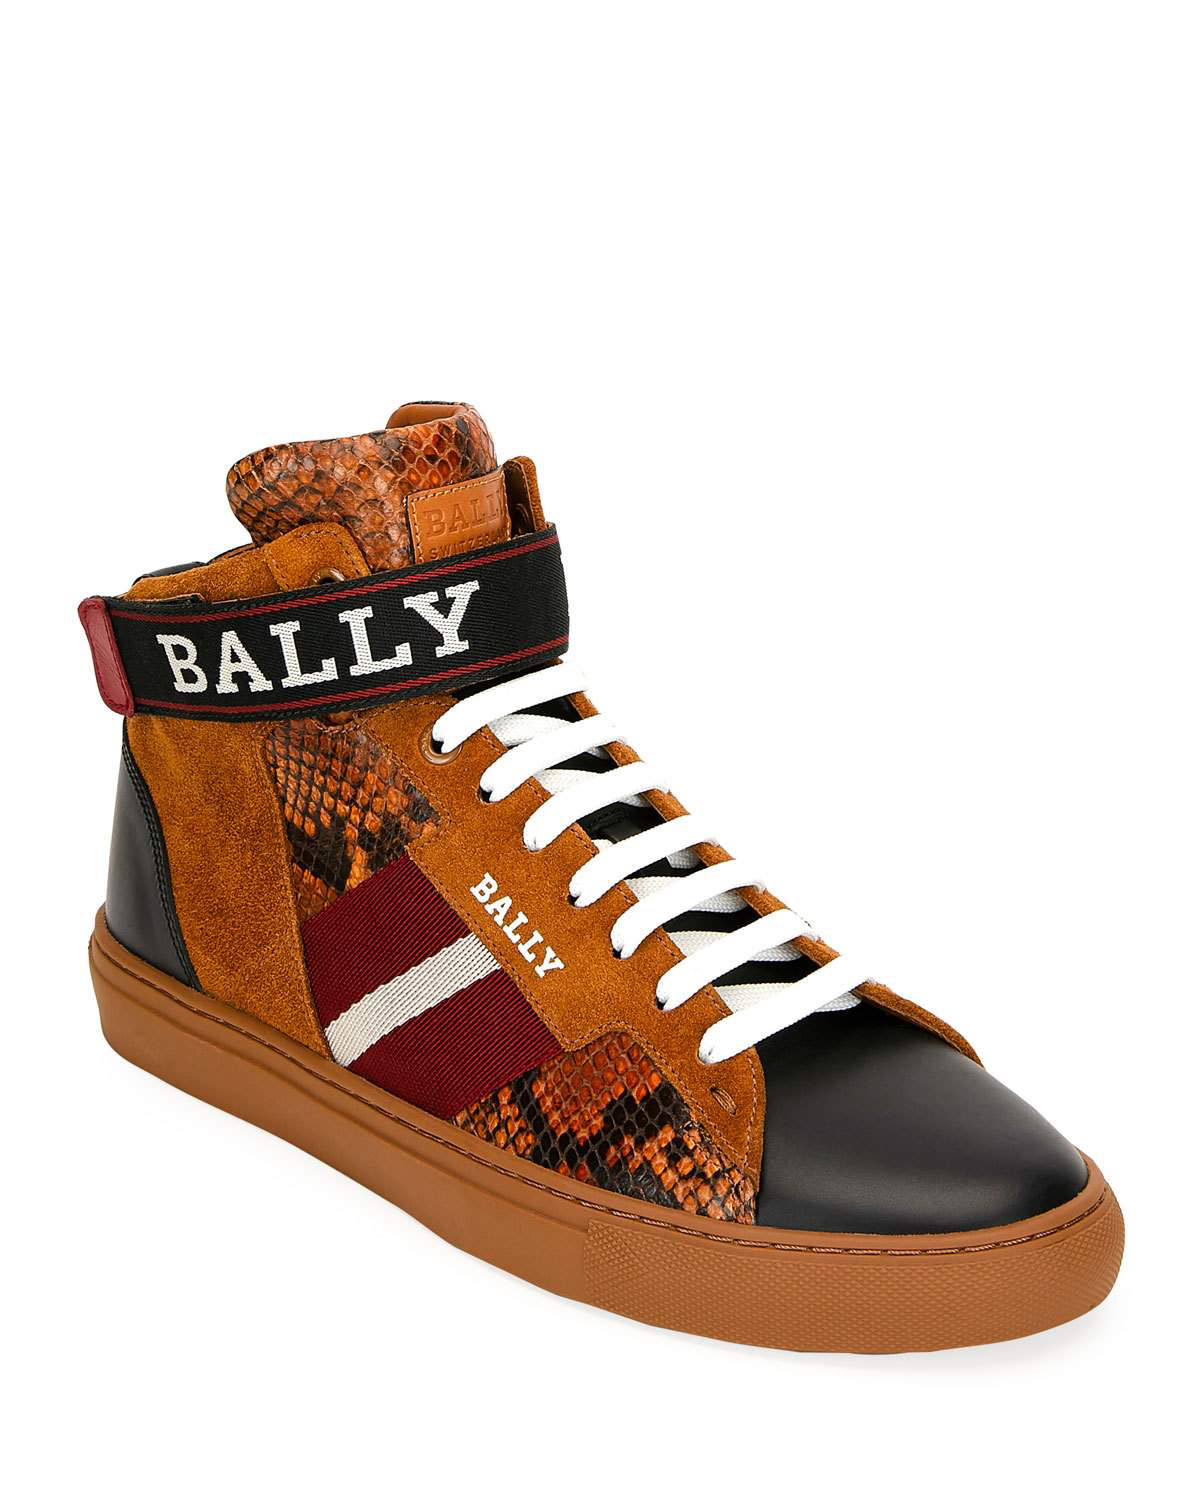 bally shoes neiman marcus